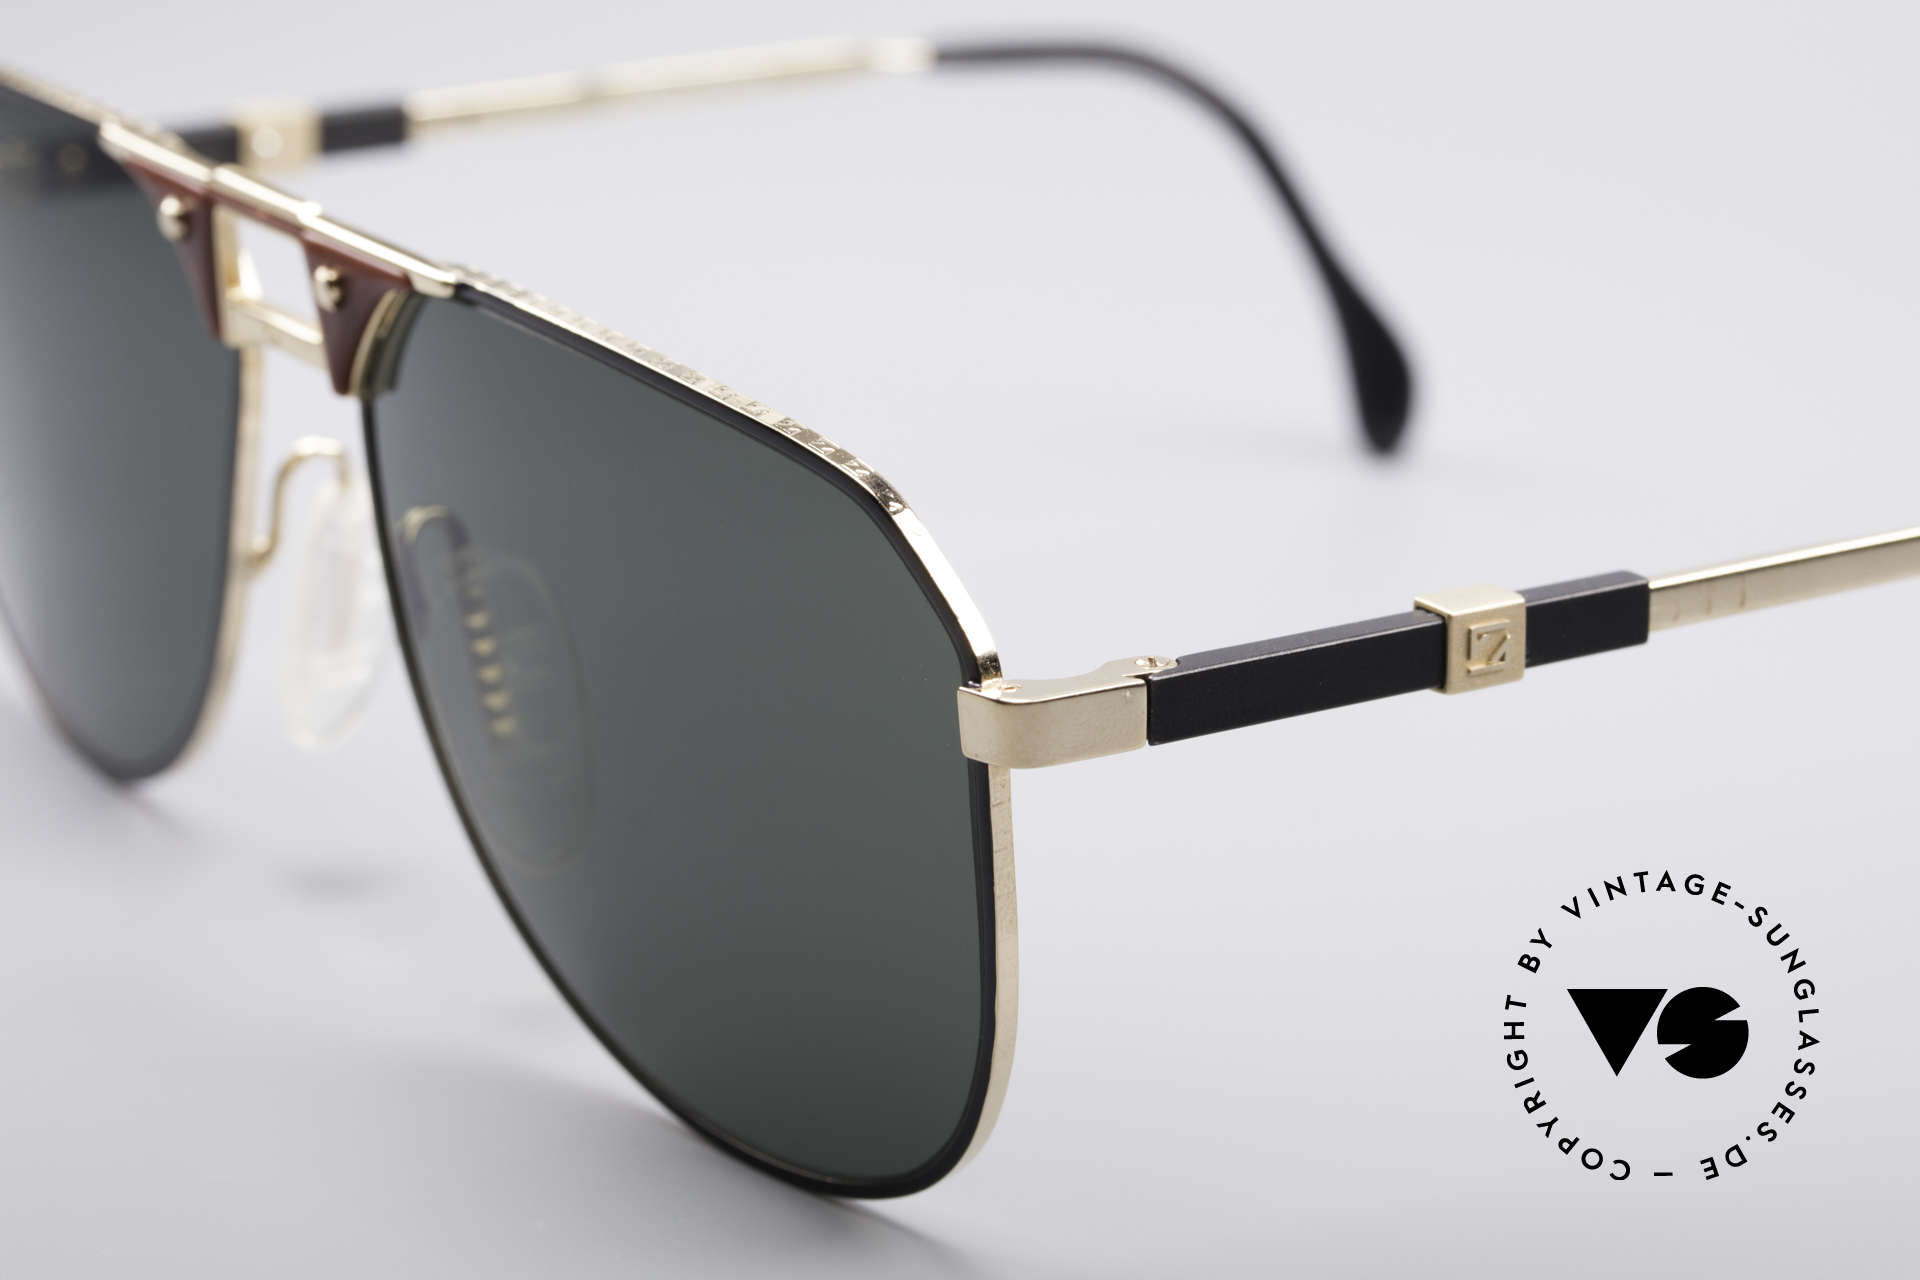 Sunglasses Zeiss 9928 Adjustable Temple Length